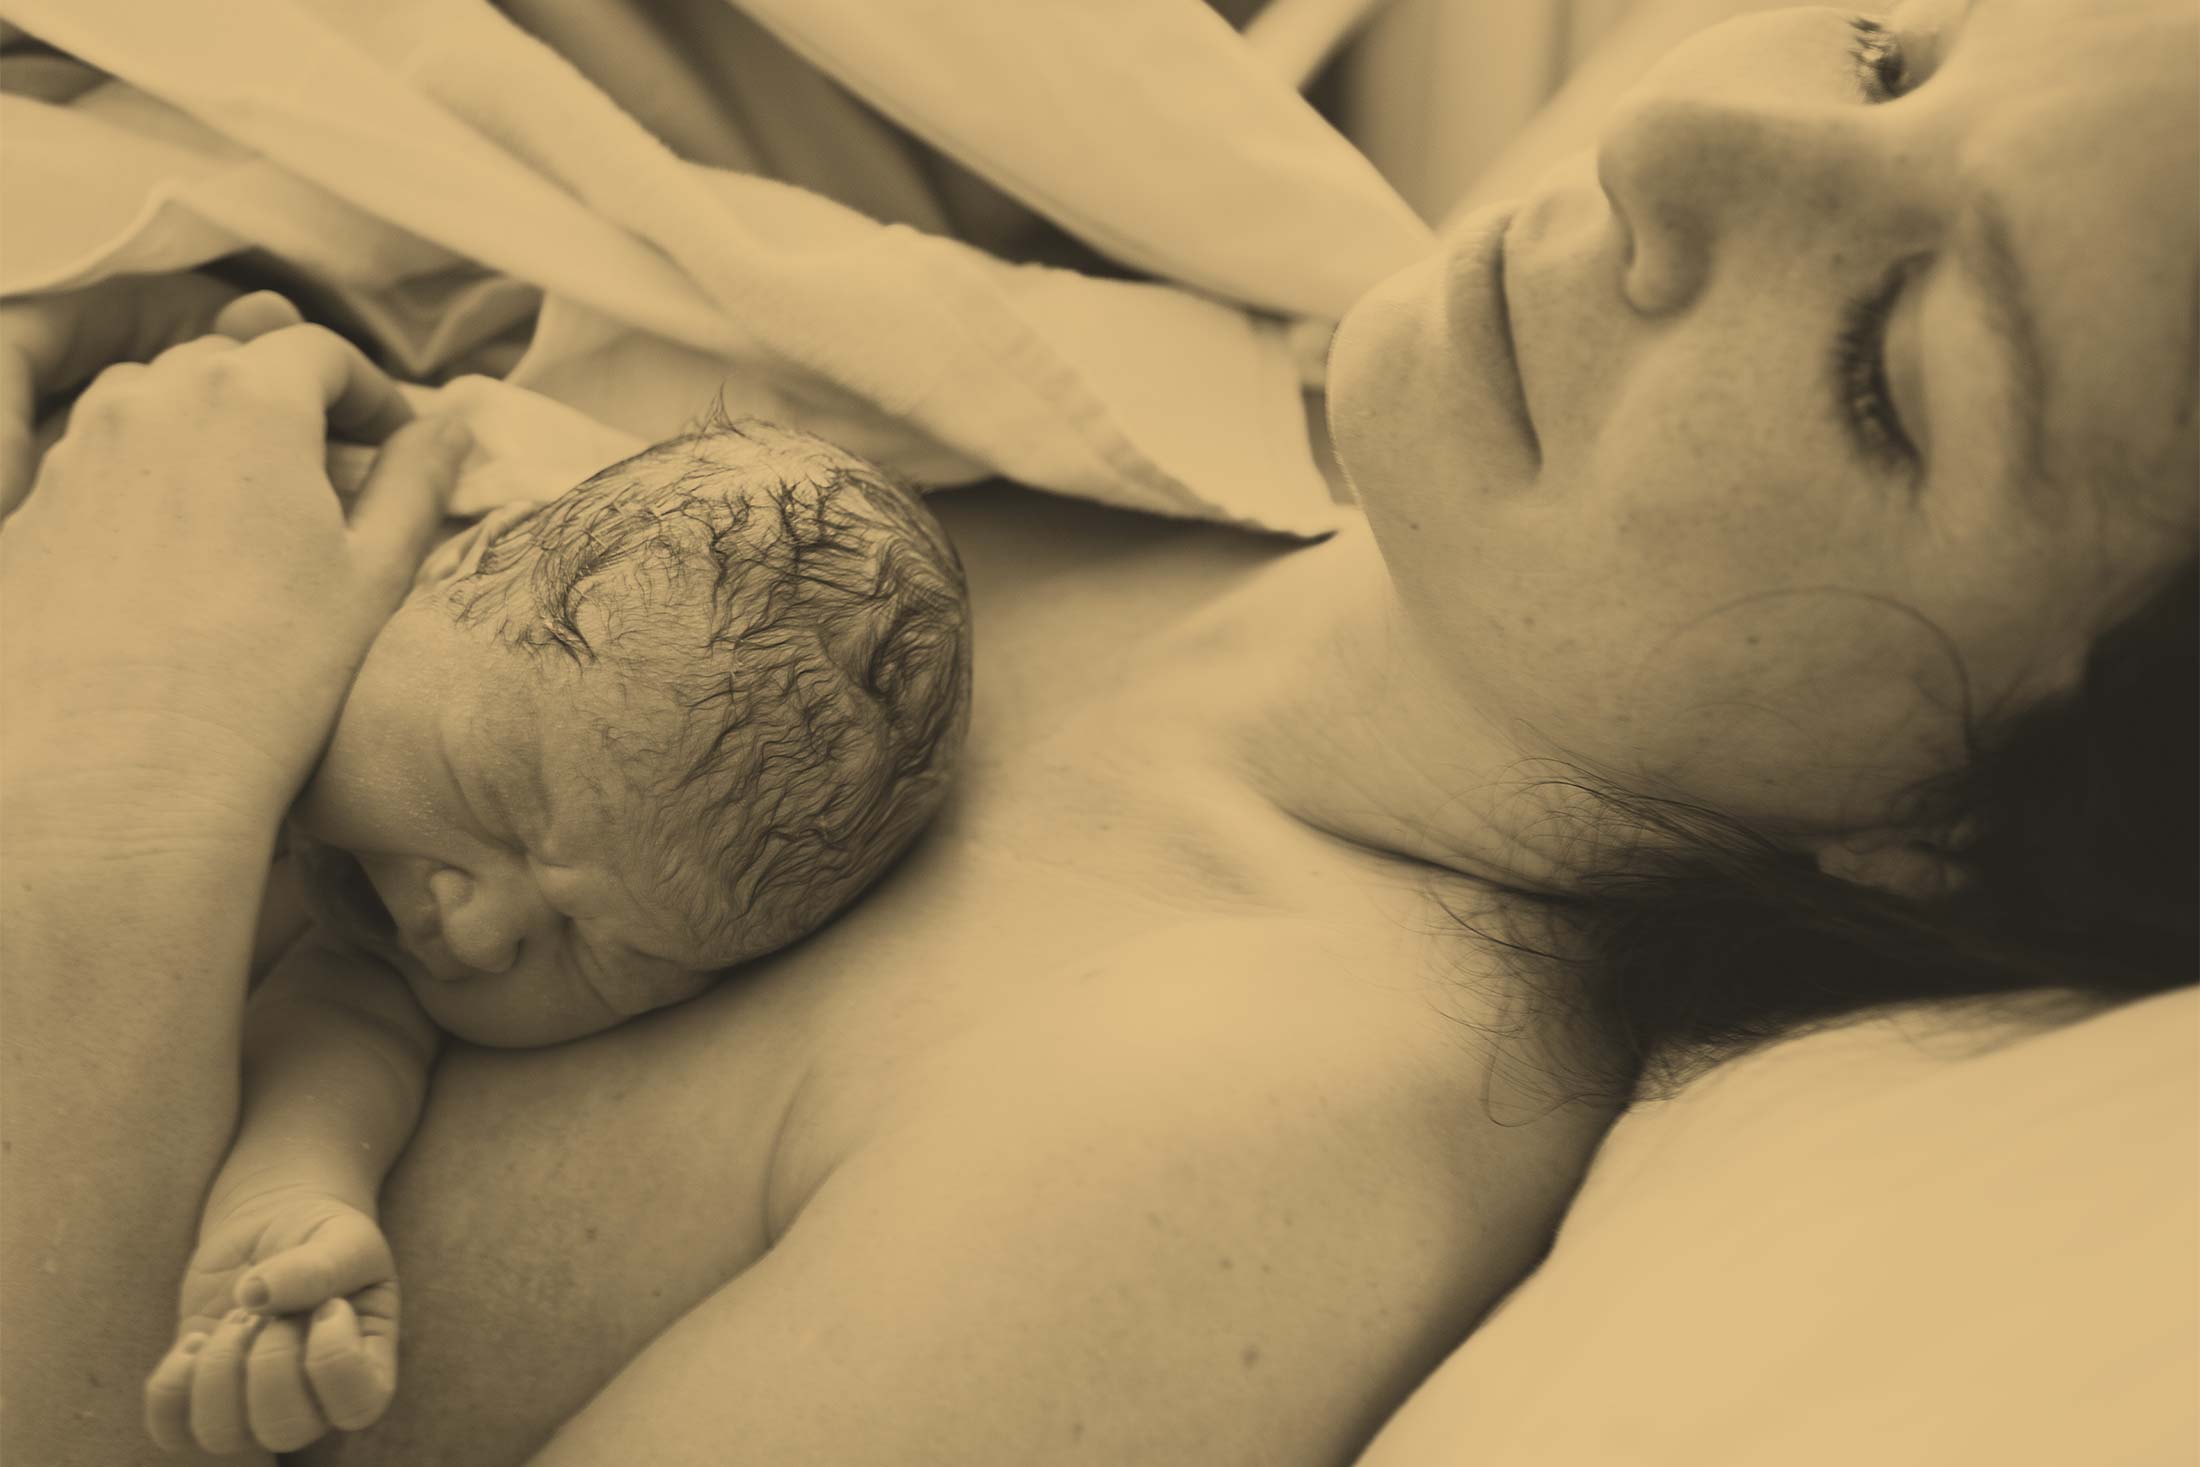 A newborn lies on its mother's chest.